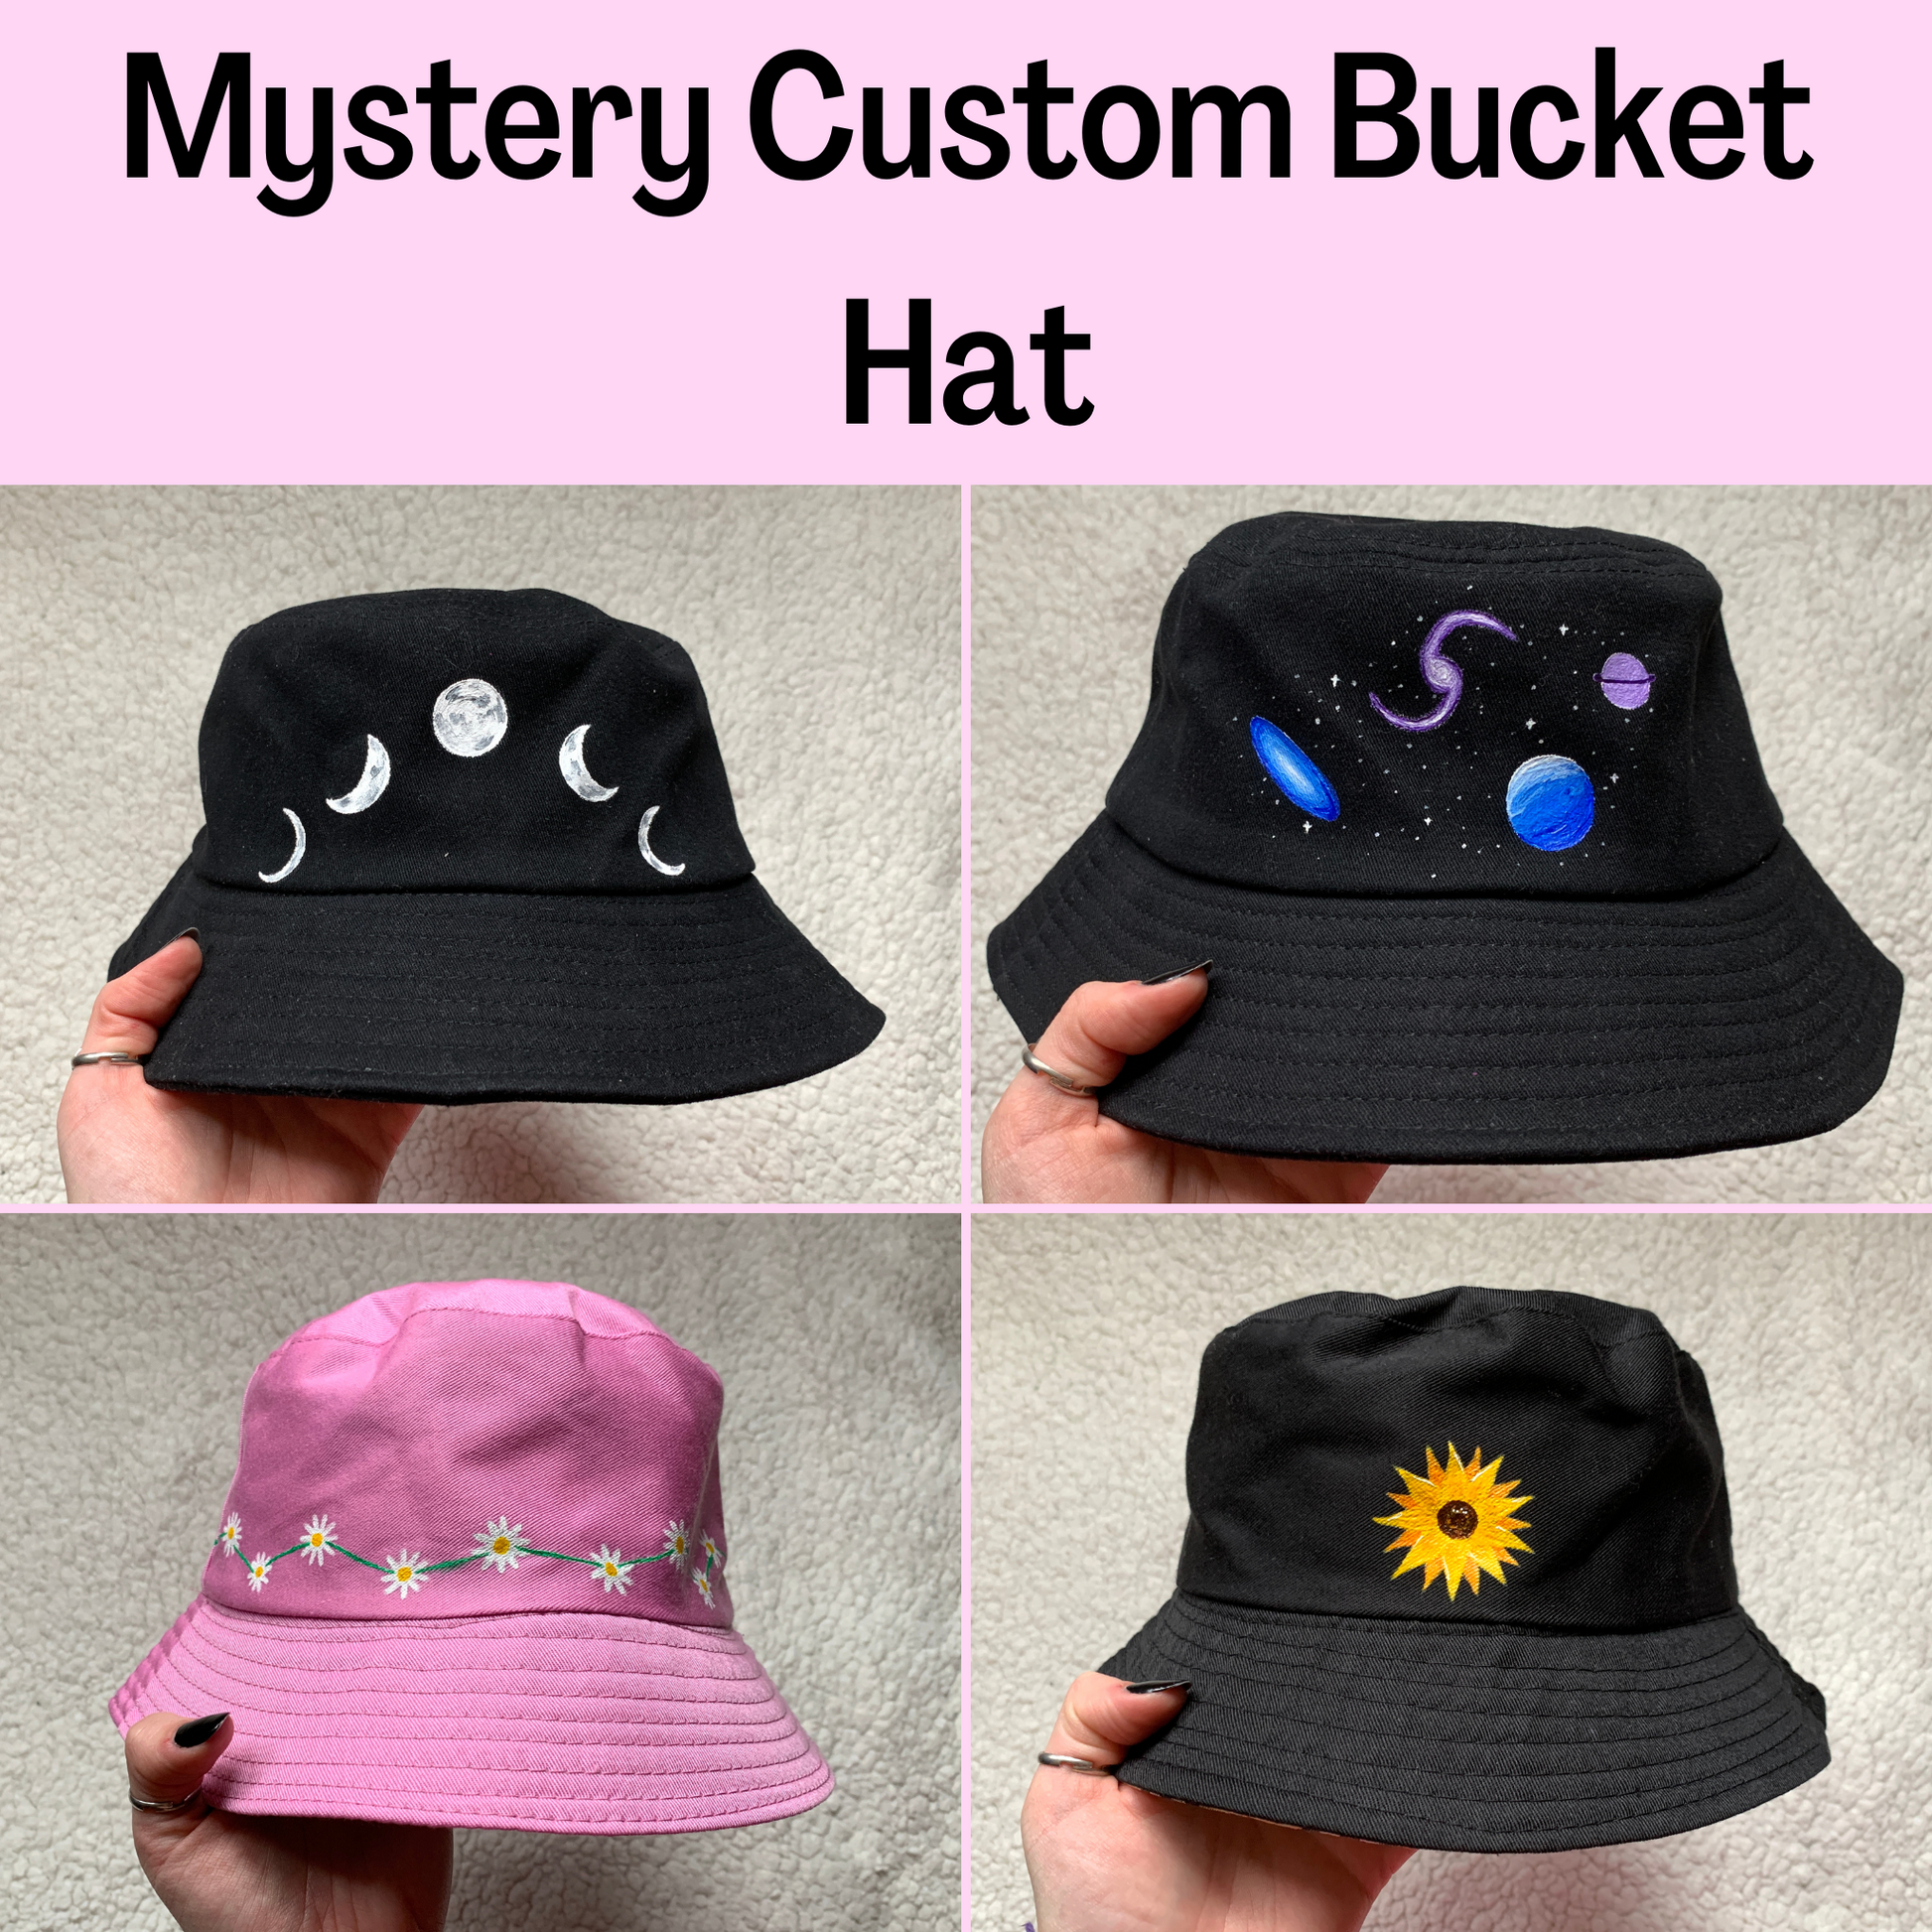 Mystery Painted Hat, Custom Bucket Hat, Sun Hat Gift, Black Fisherman Hat,  Mystery Gift, Custom Painted Hat, Customised Gift, Surprise Gift –  EmAttemptsArt